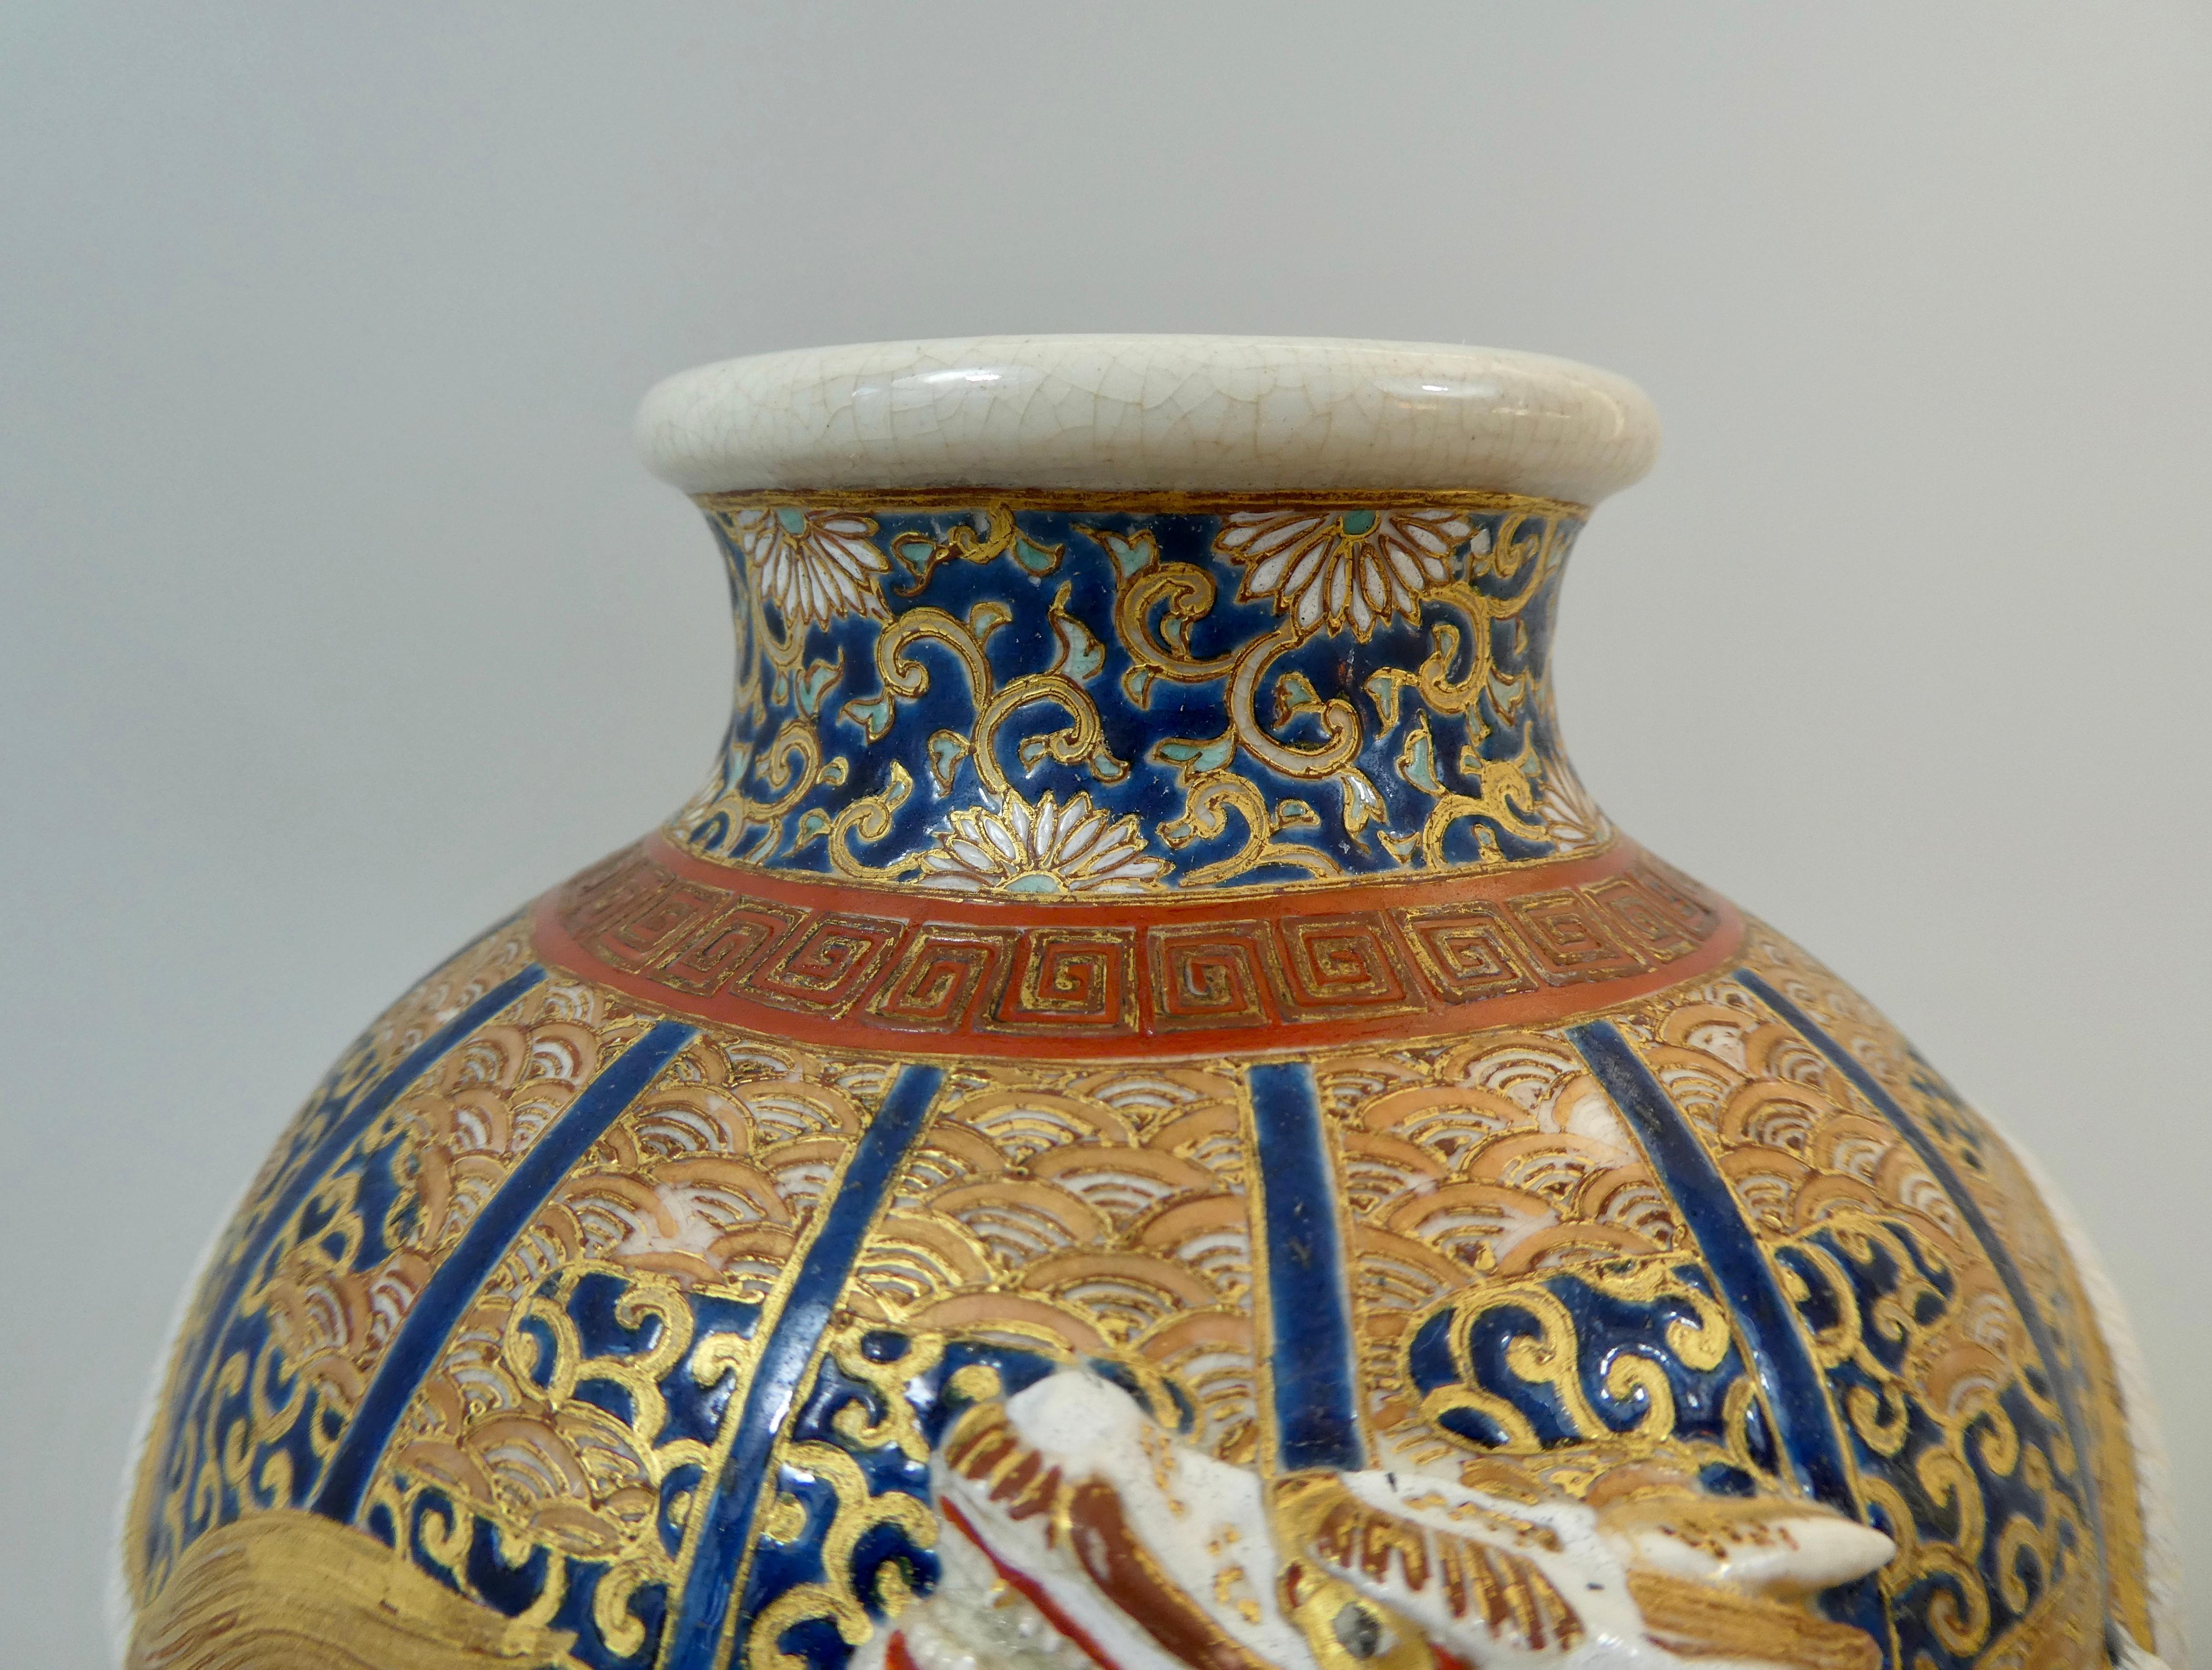 Earthenware Imperial Satsuma earthenware vase, circa 1870, Meiji Period.